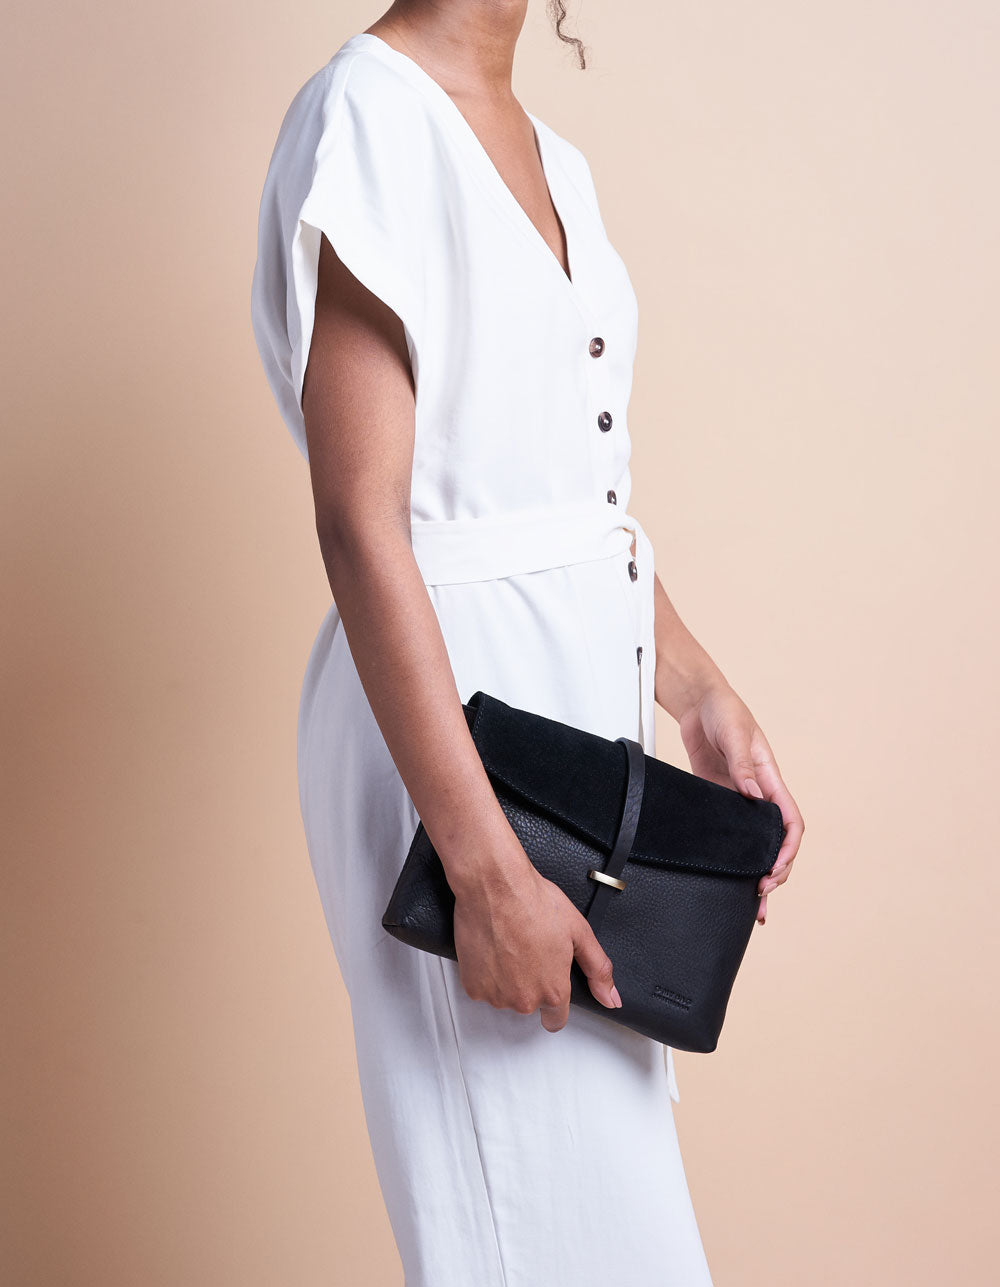 Ella Mini Smooth Leather Bag | Black